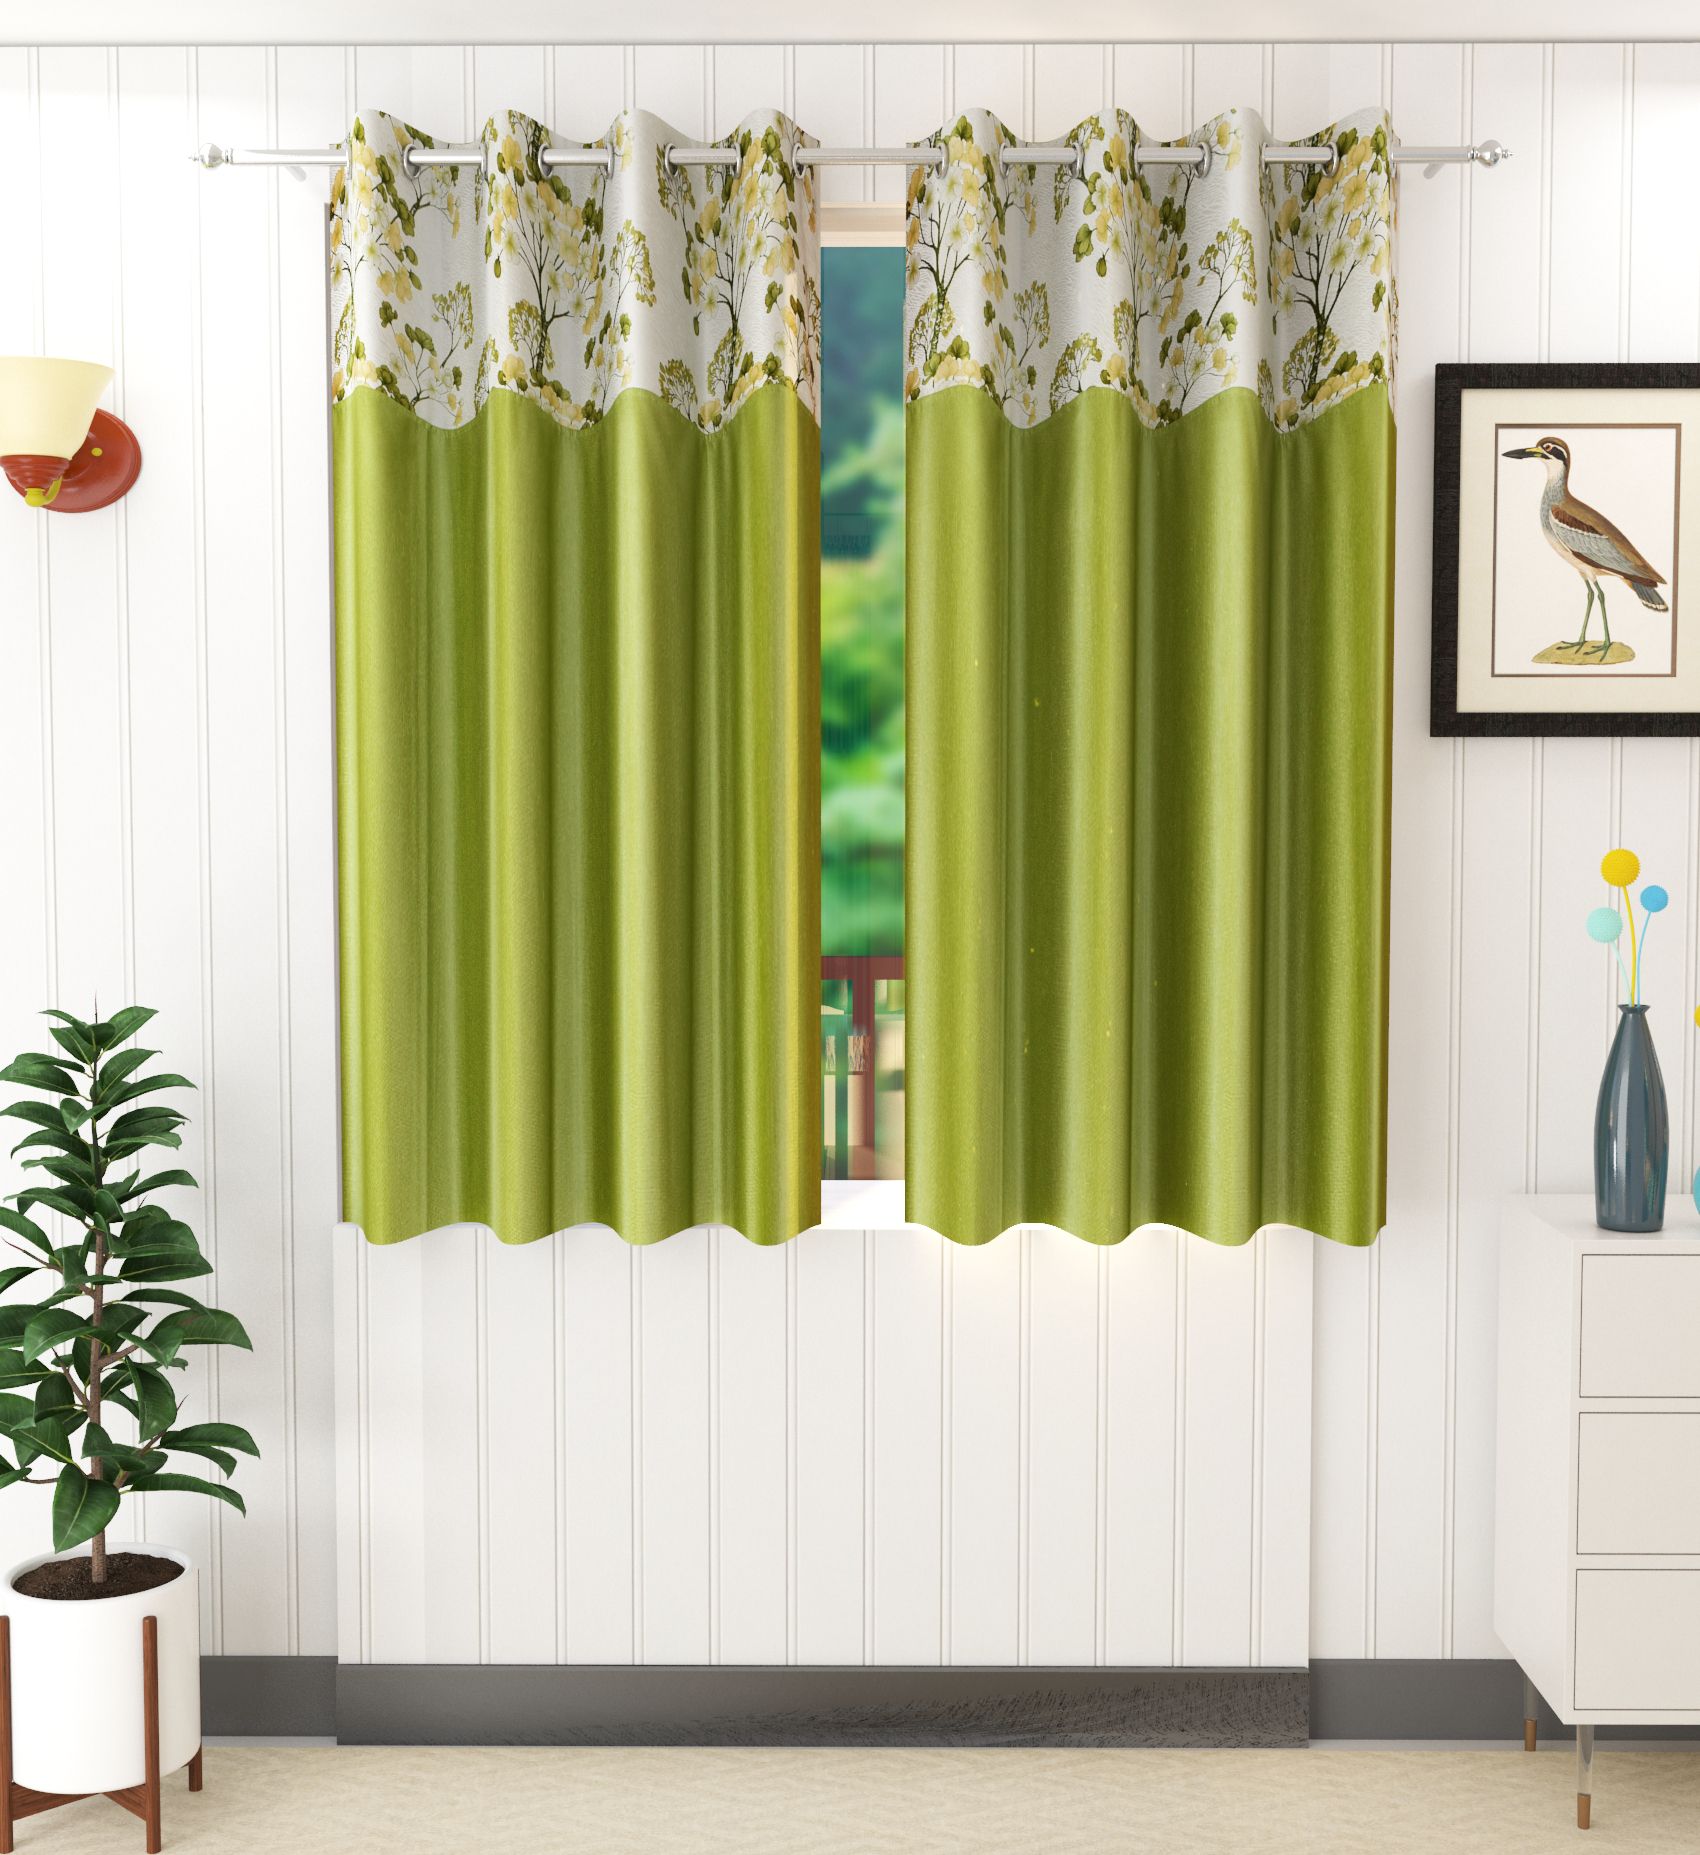     			Homefab India Floral Room Darkening Eyelet Curtain 5 ft ( Pack of 2 ) - Green